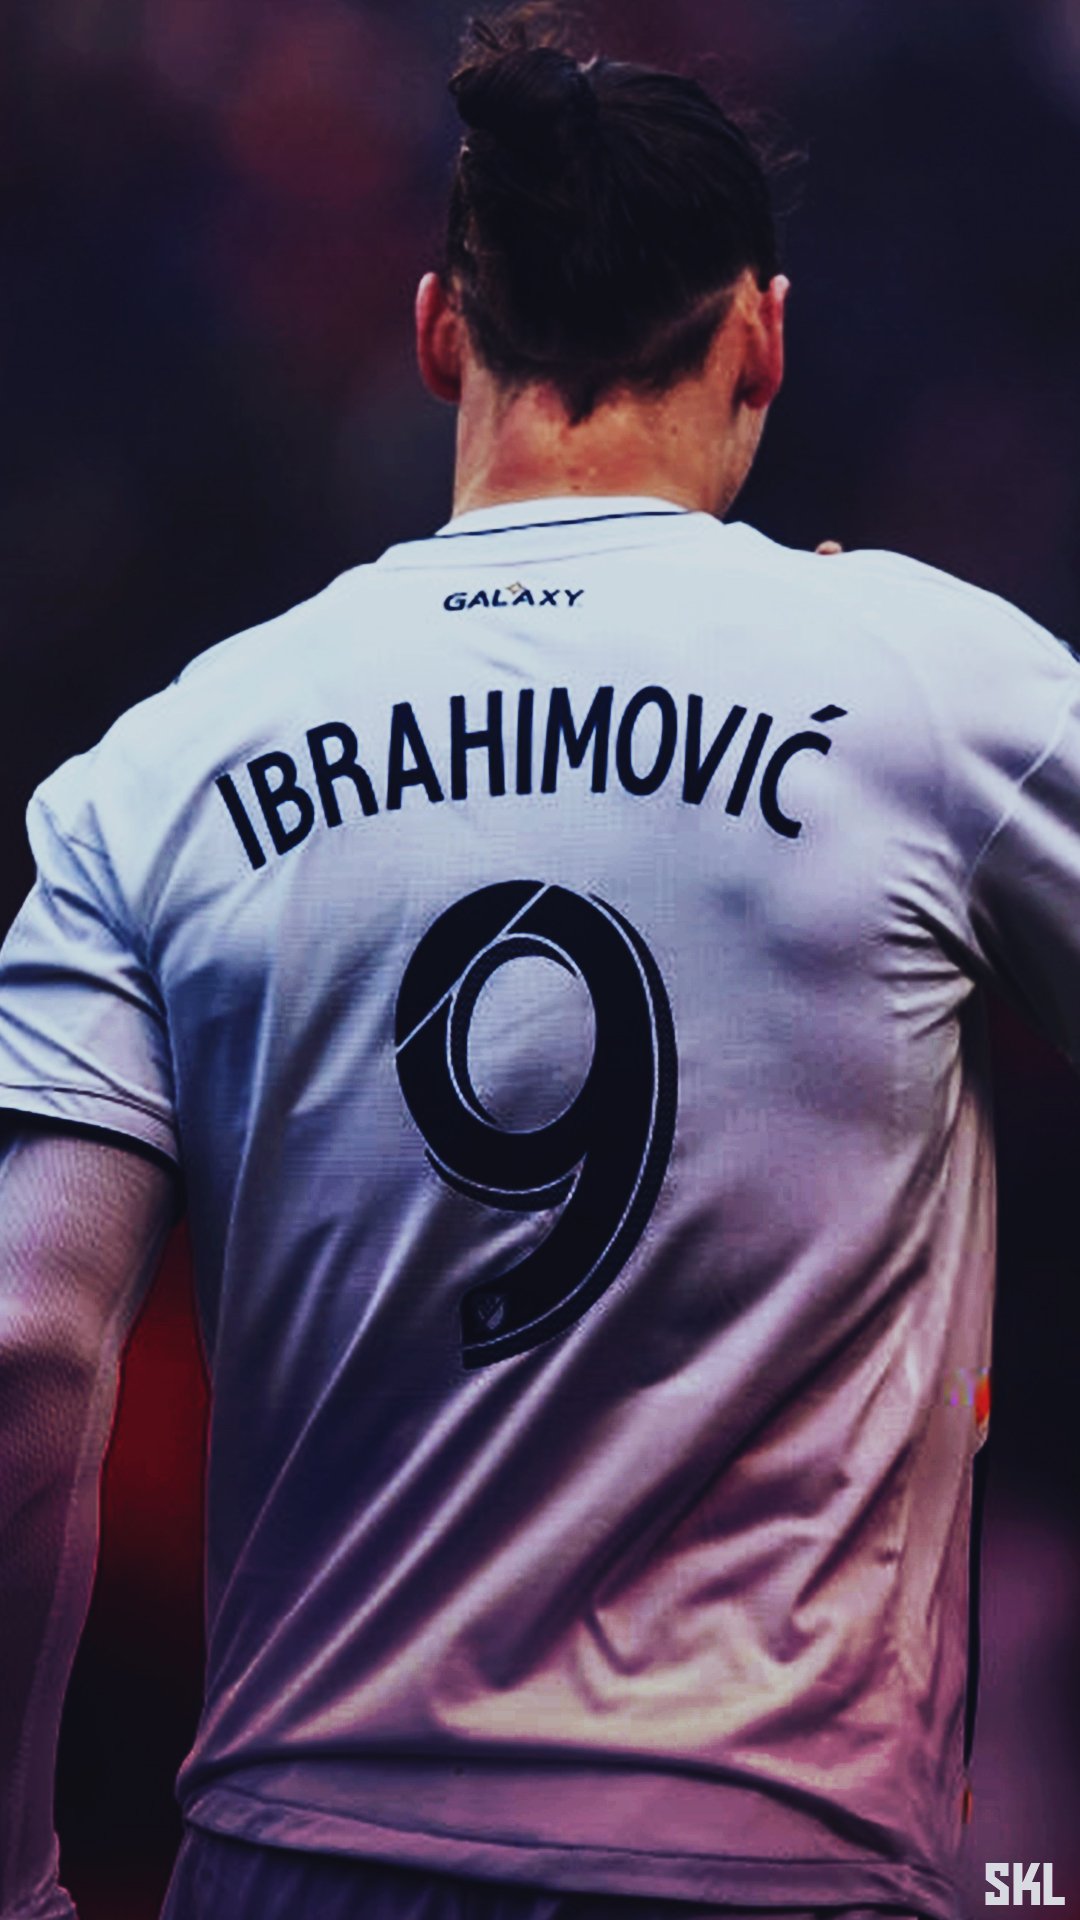 Zlatan Ibrahimovic La Galaxy Wallpapers